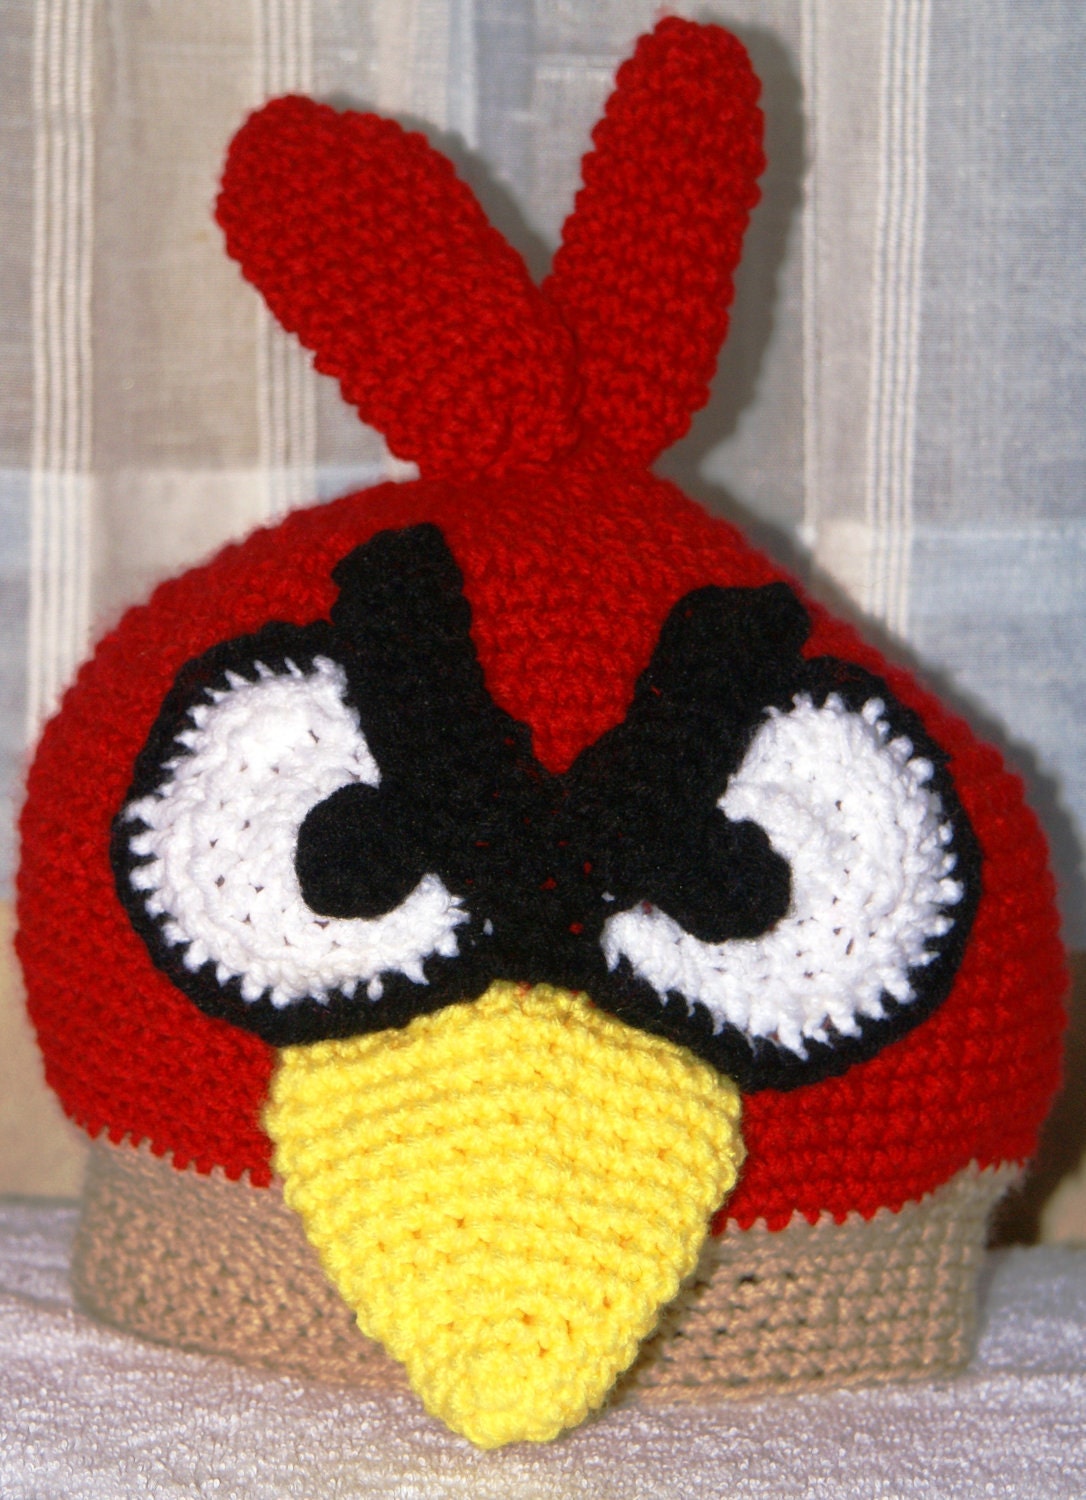 Crochet Hat - Anger Management